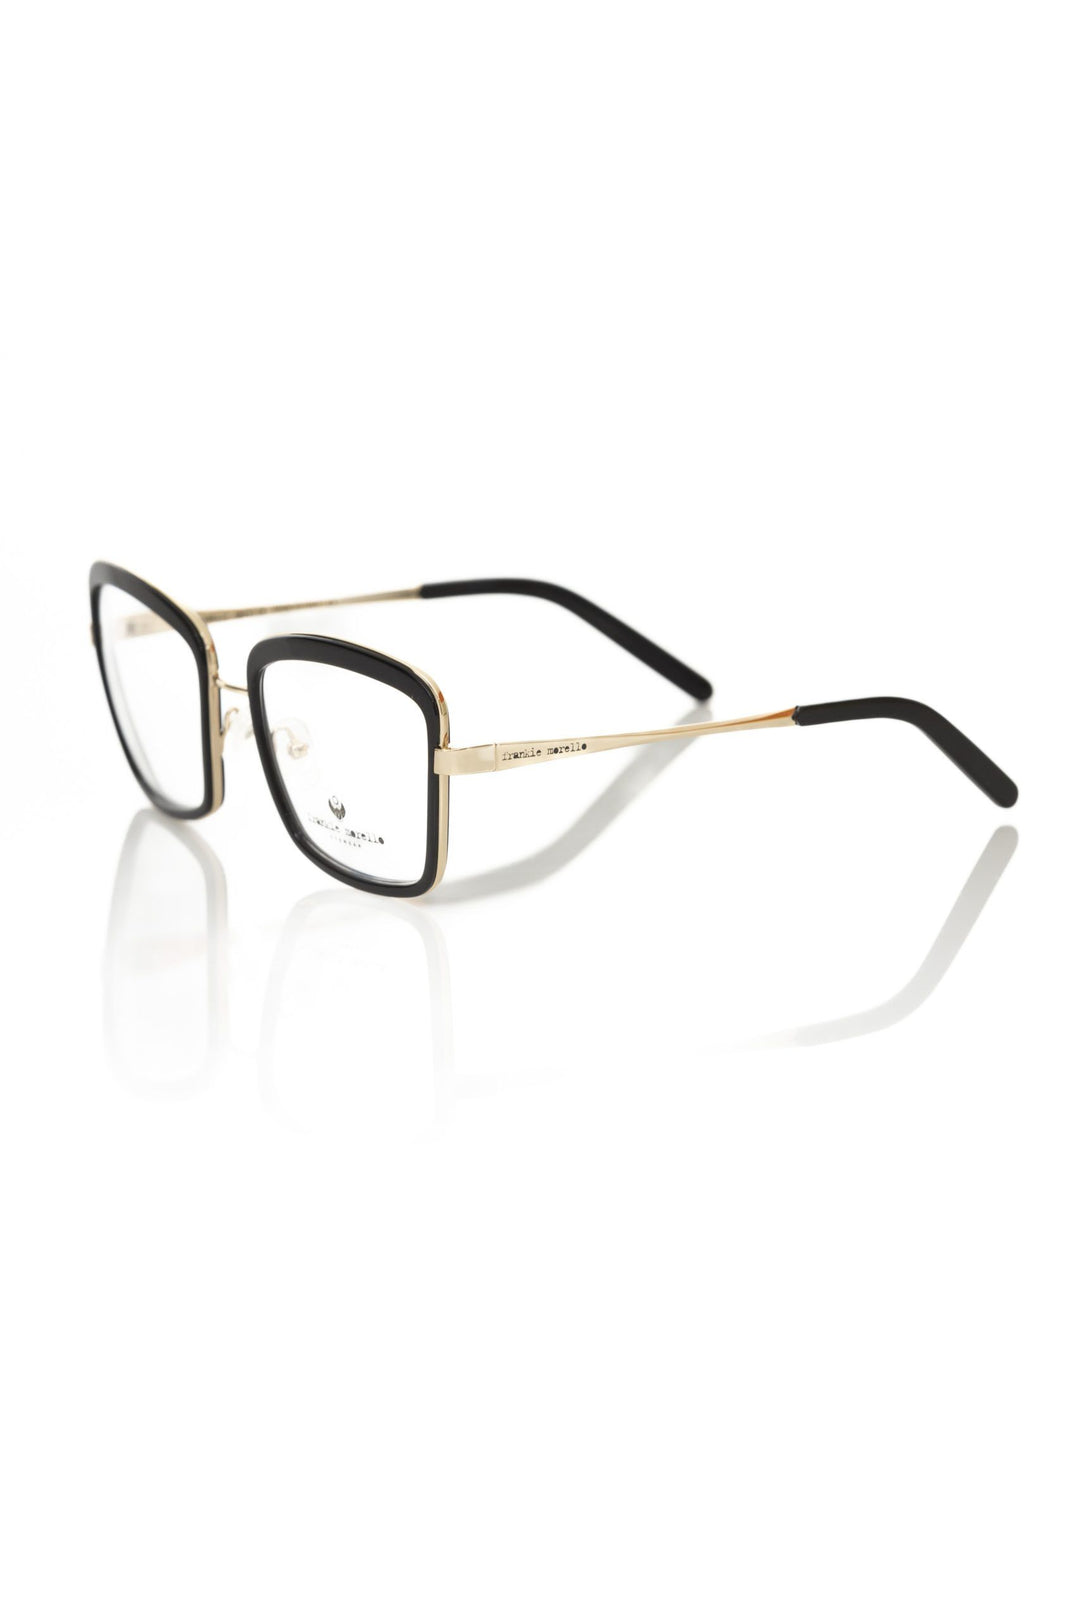 Frankie Morello Sophisticated Square Black & Gold Eyeglasses